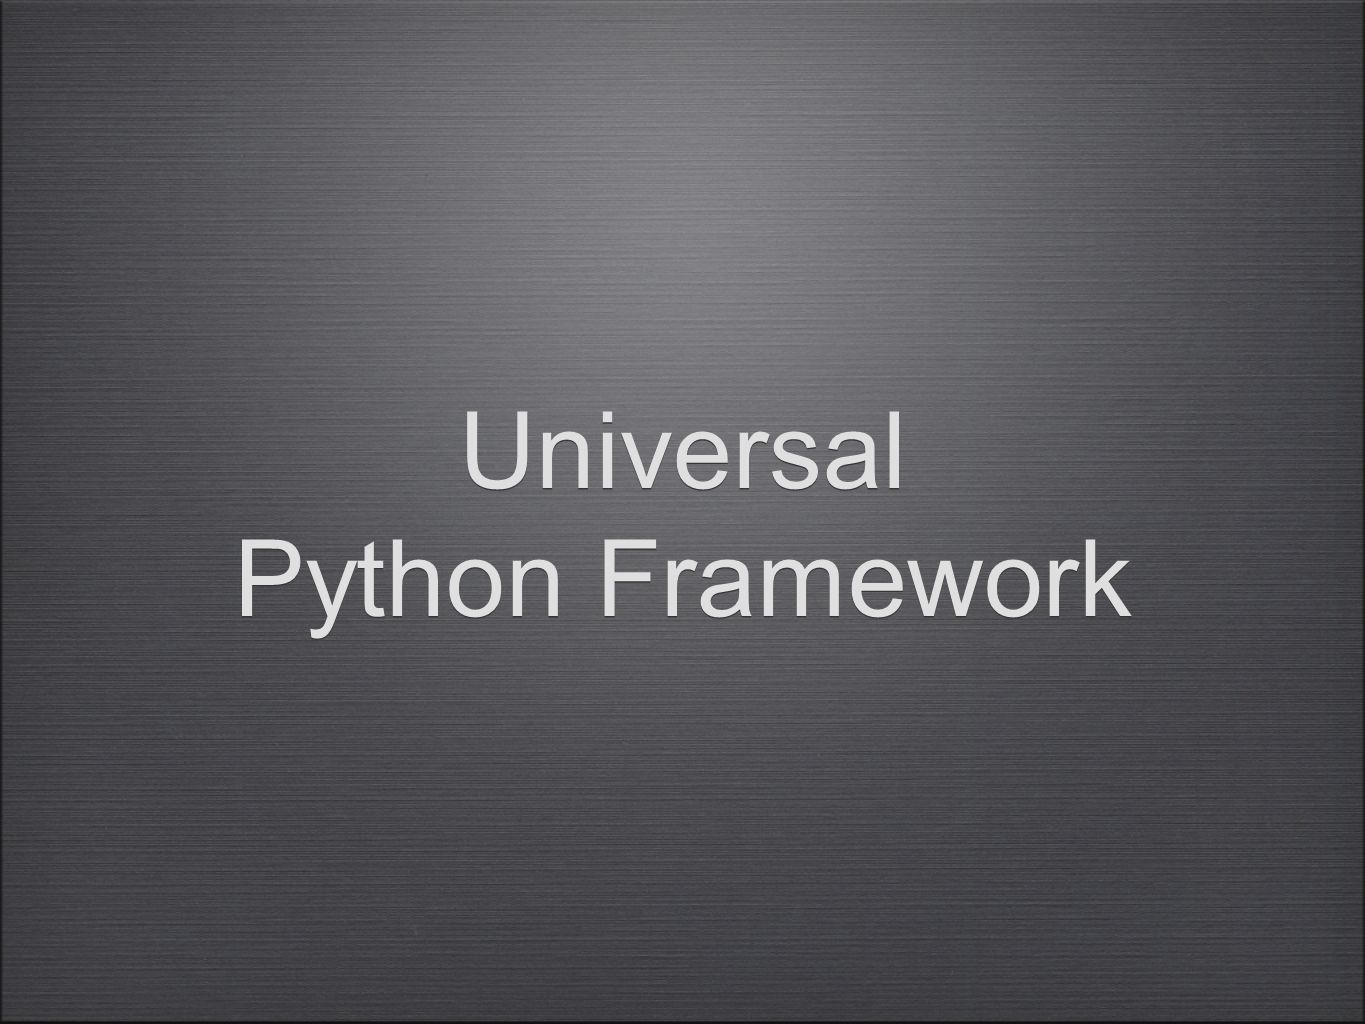 Universal Python Framework